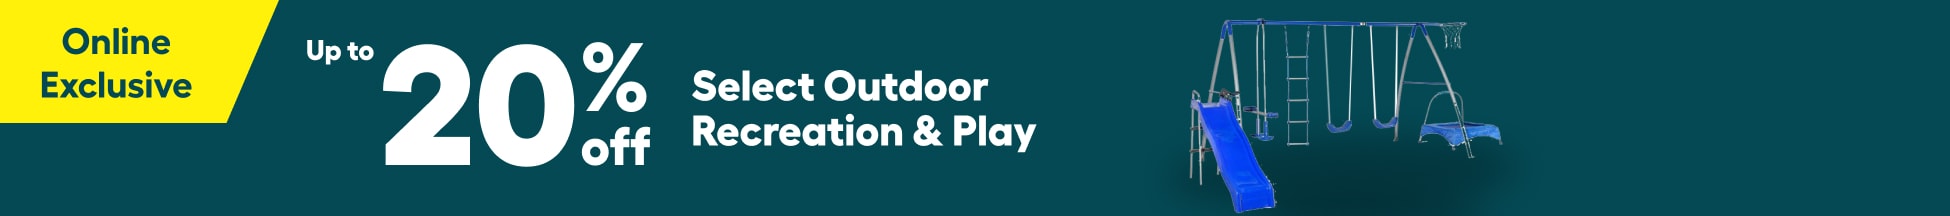 Outdoor recreation & play